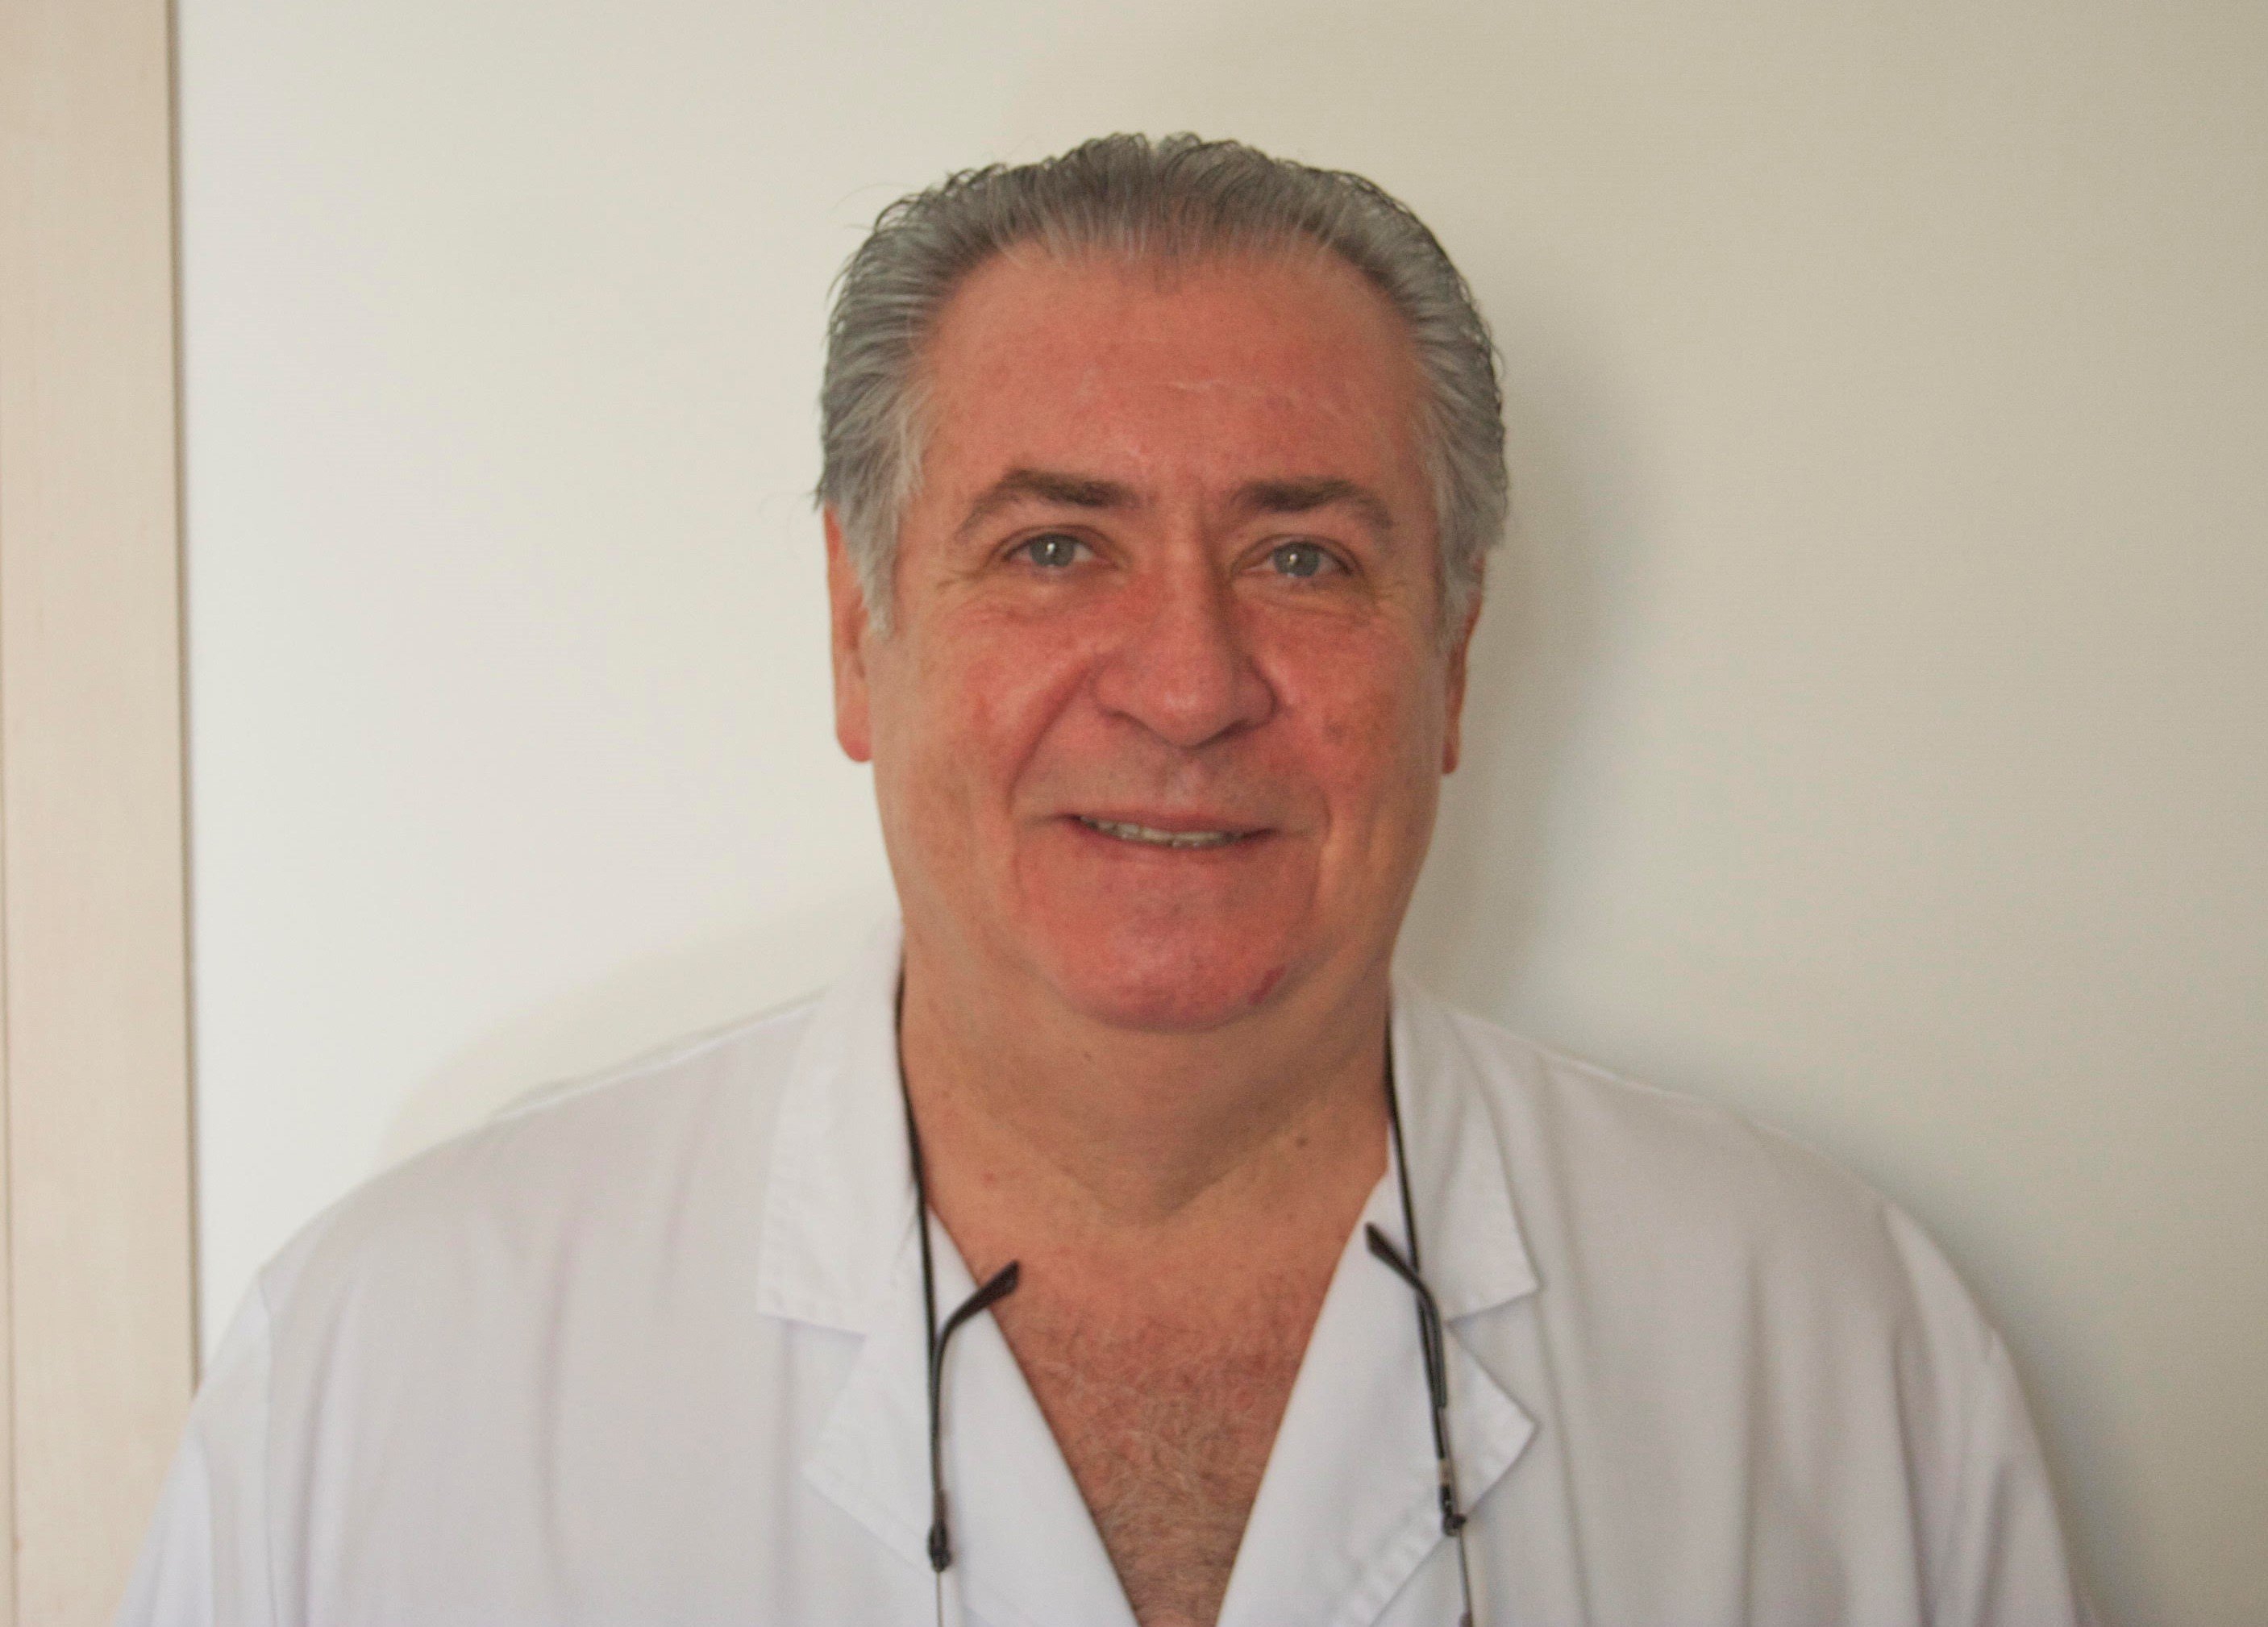 Dr. Javier Foncillas